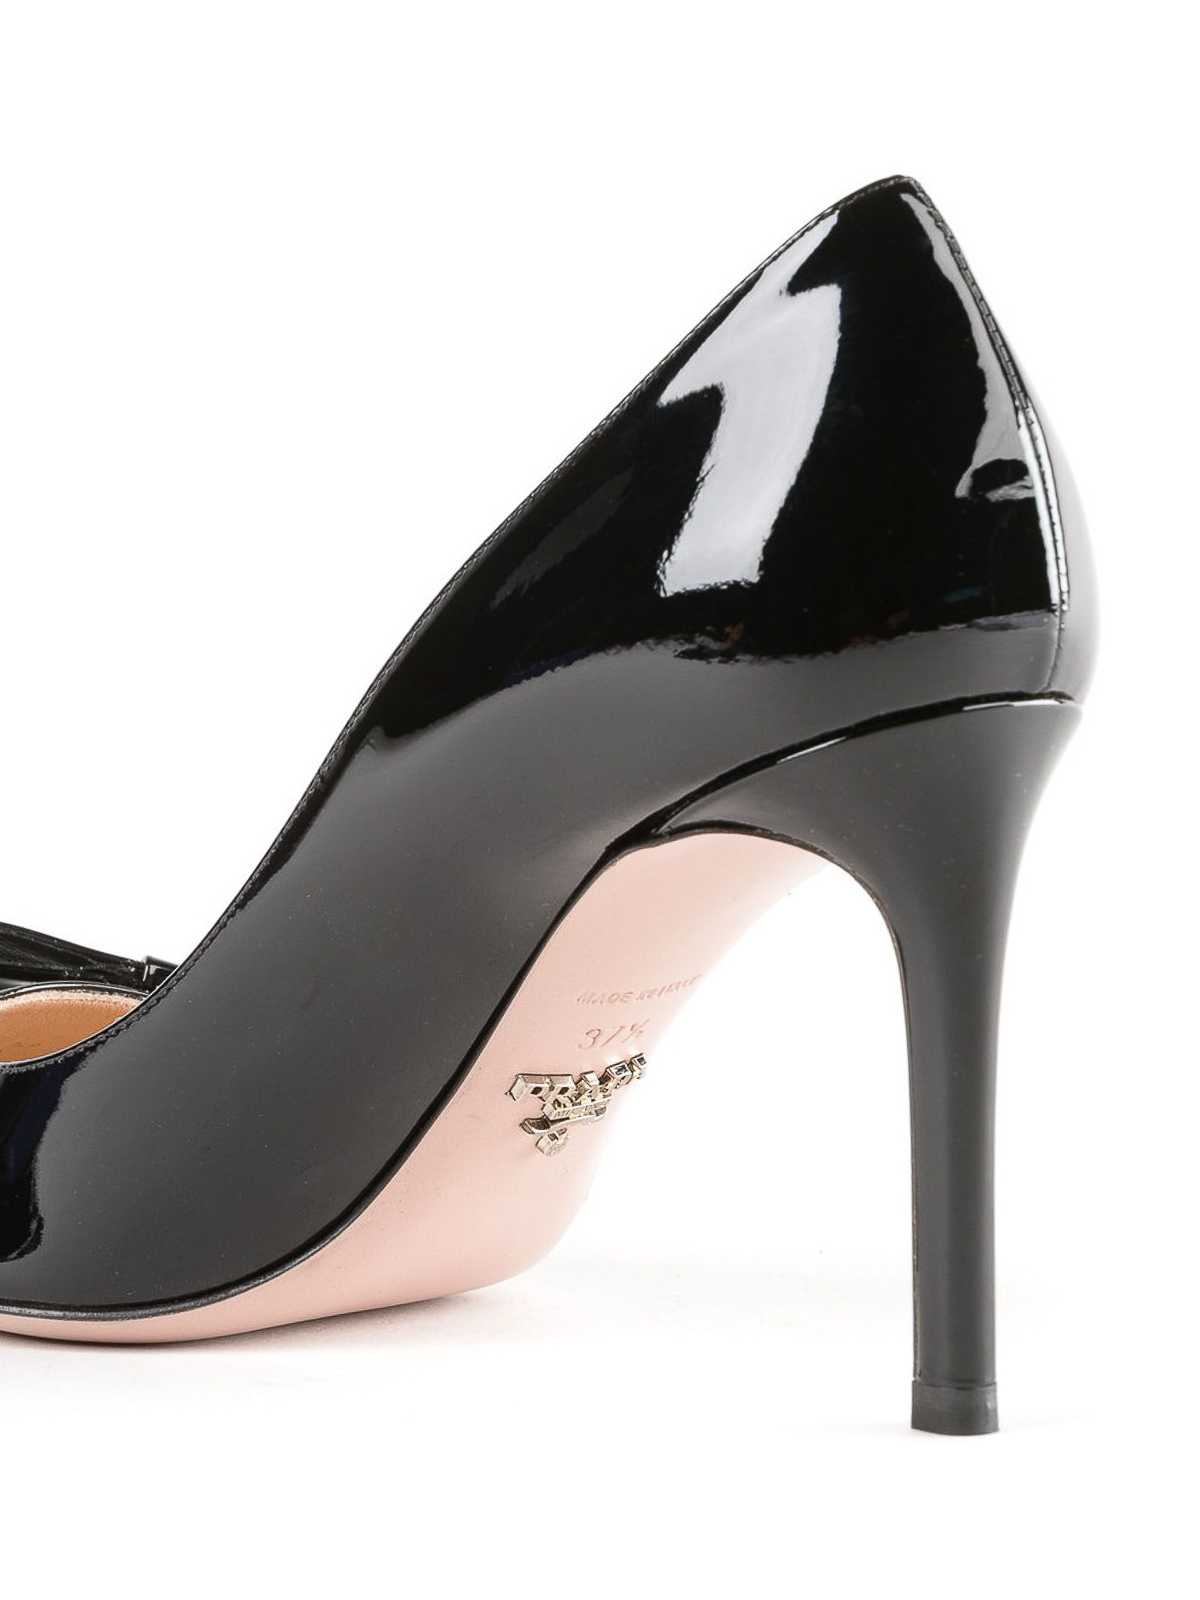 prada patent leather heels